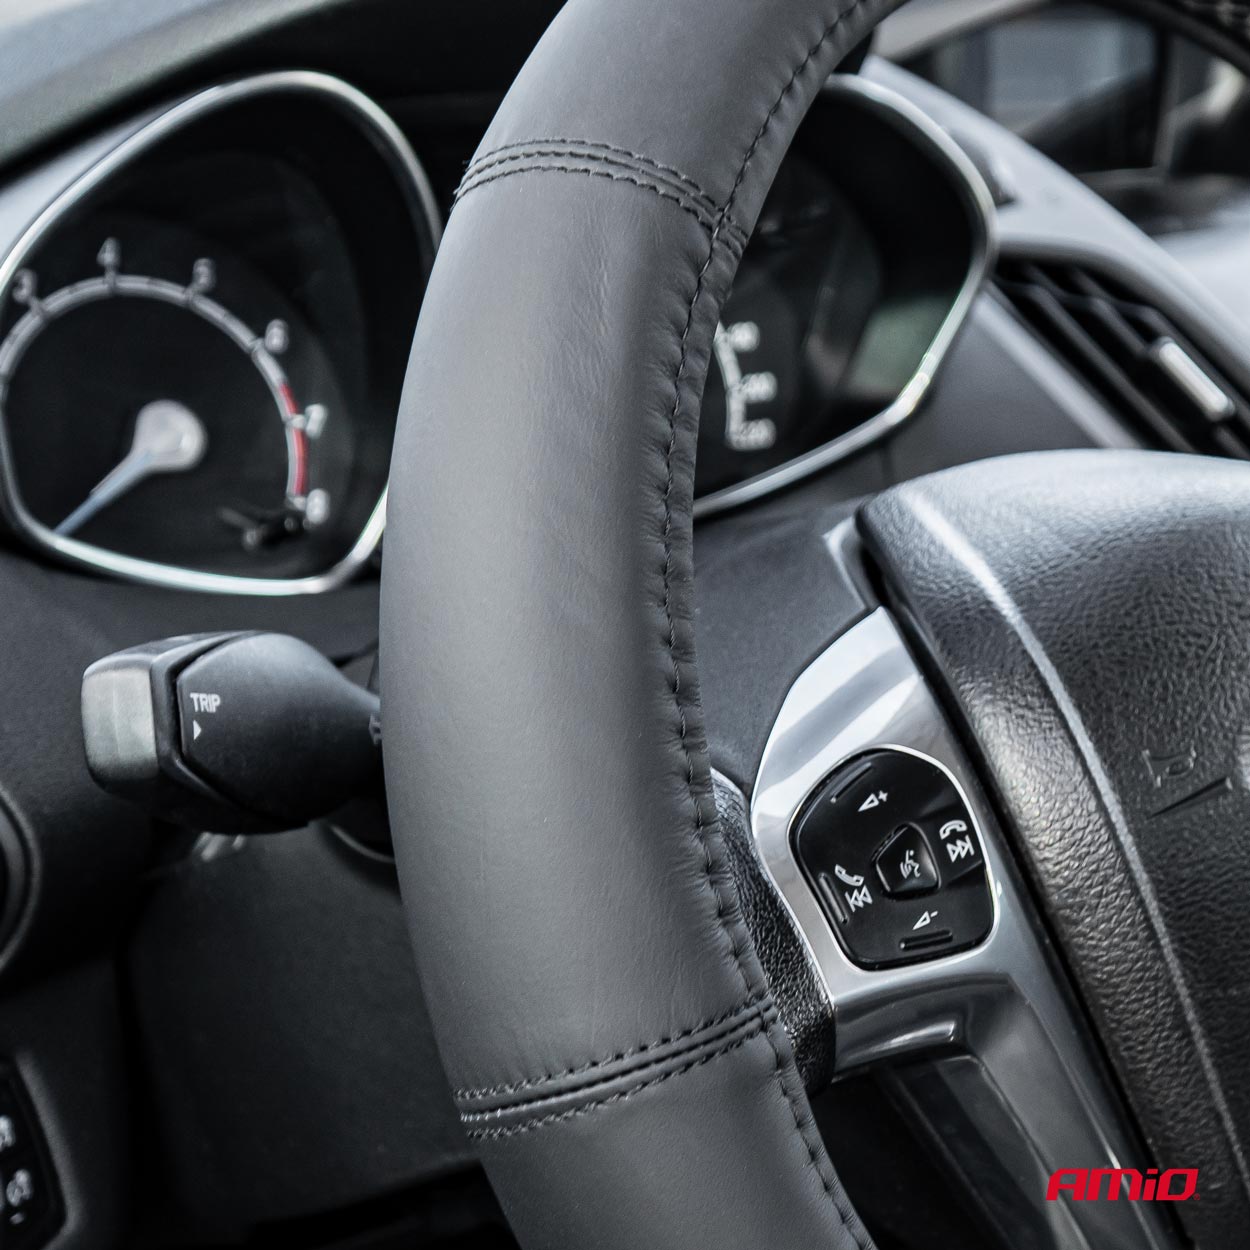 Amio leather steering wheel cover SWC-48-M - Ø 37-39 cm - Black thumb